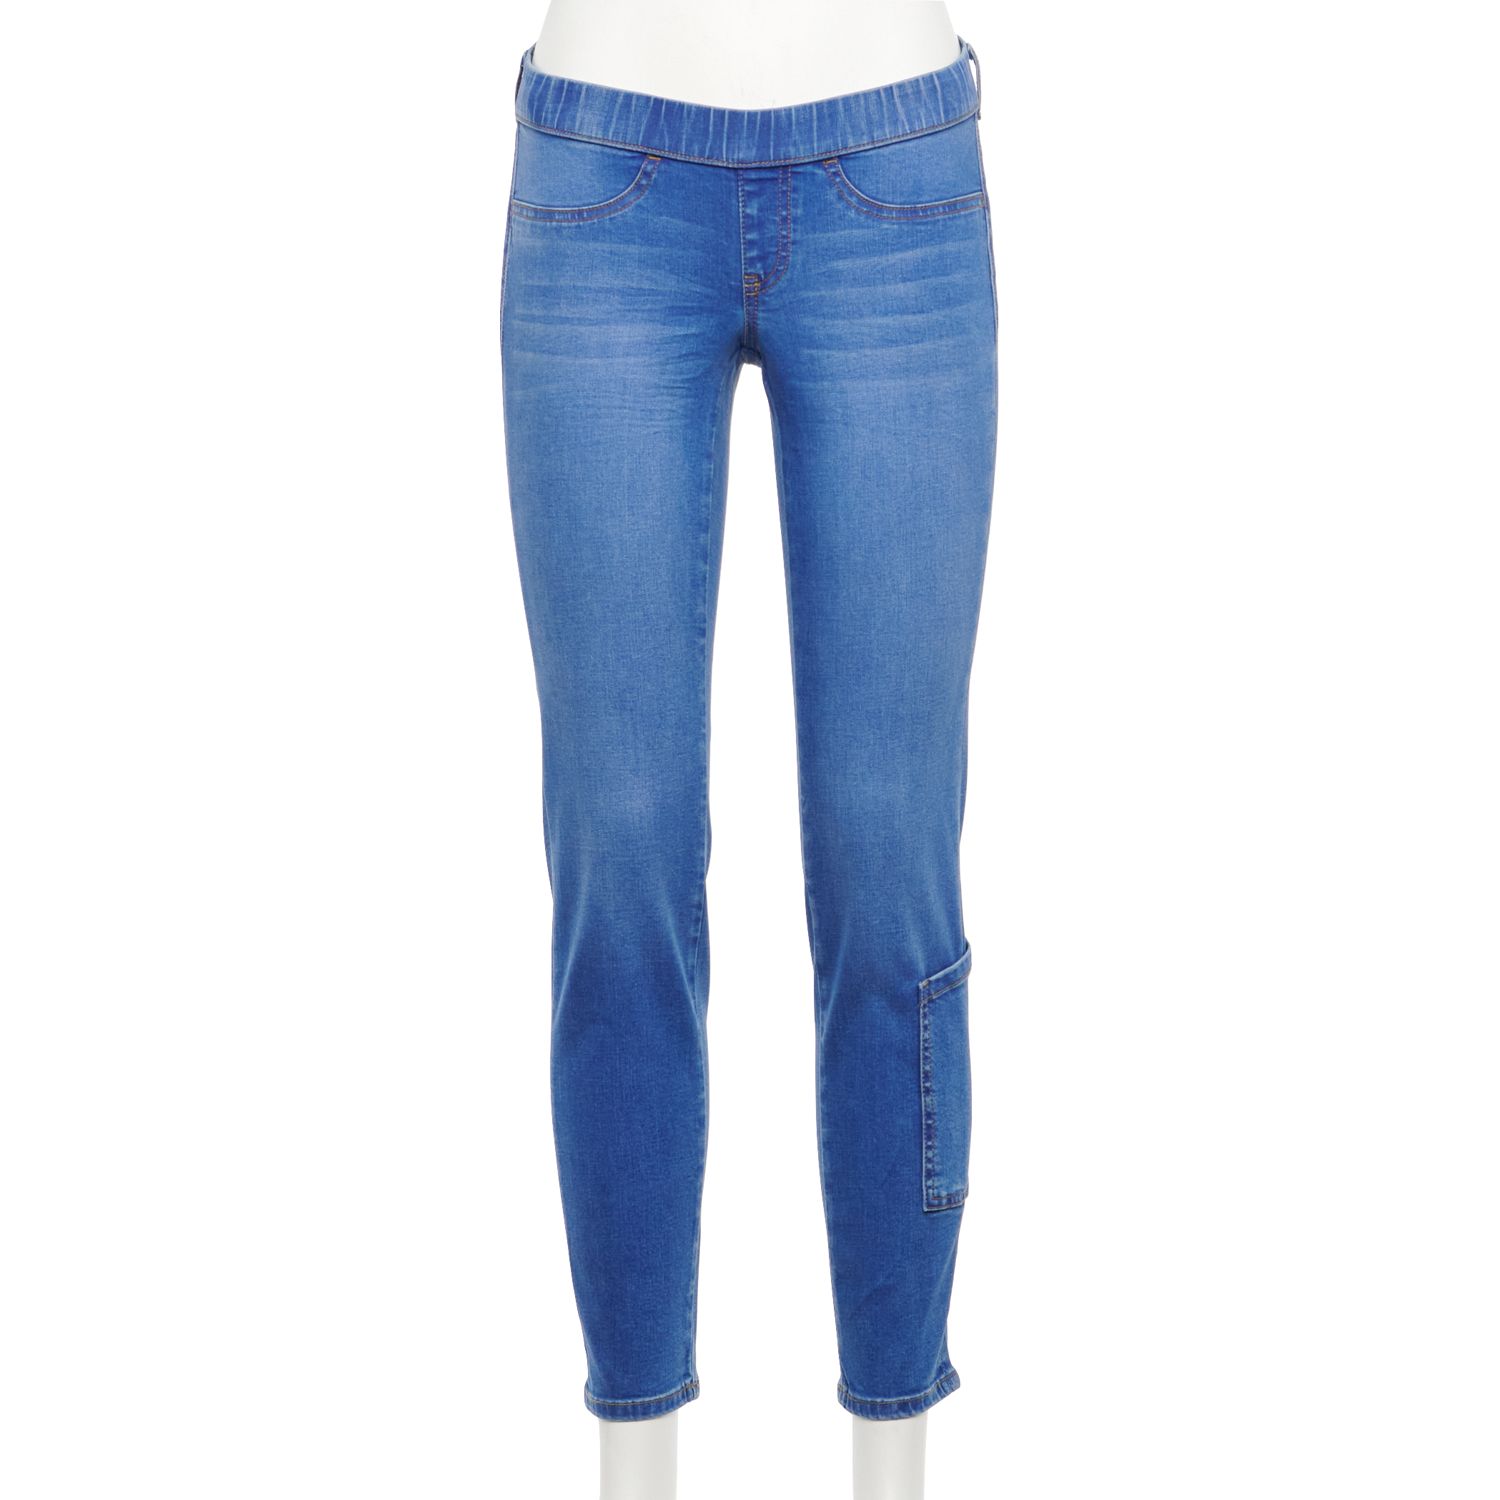 jolt jeans website